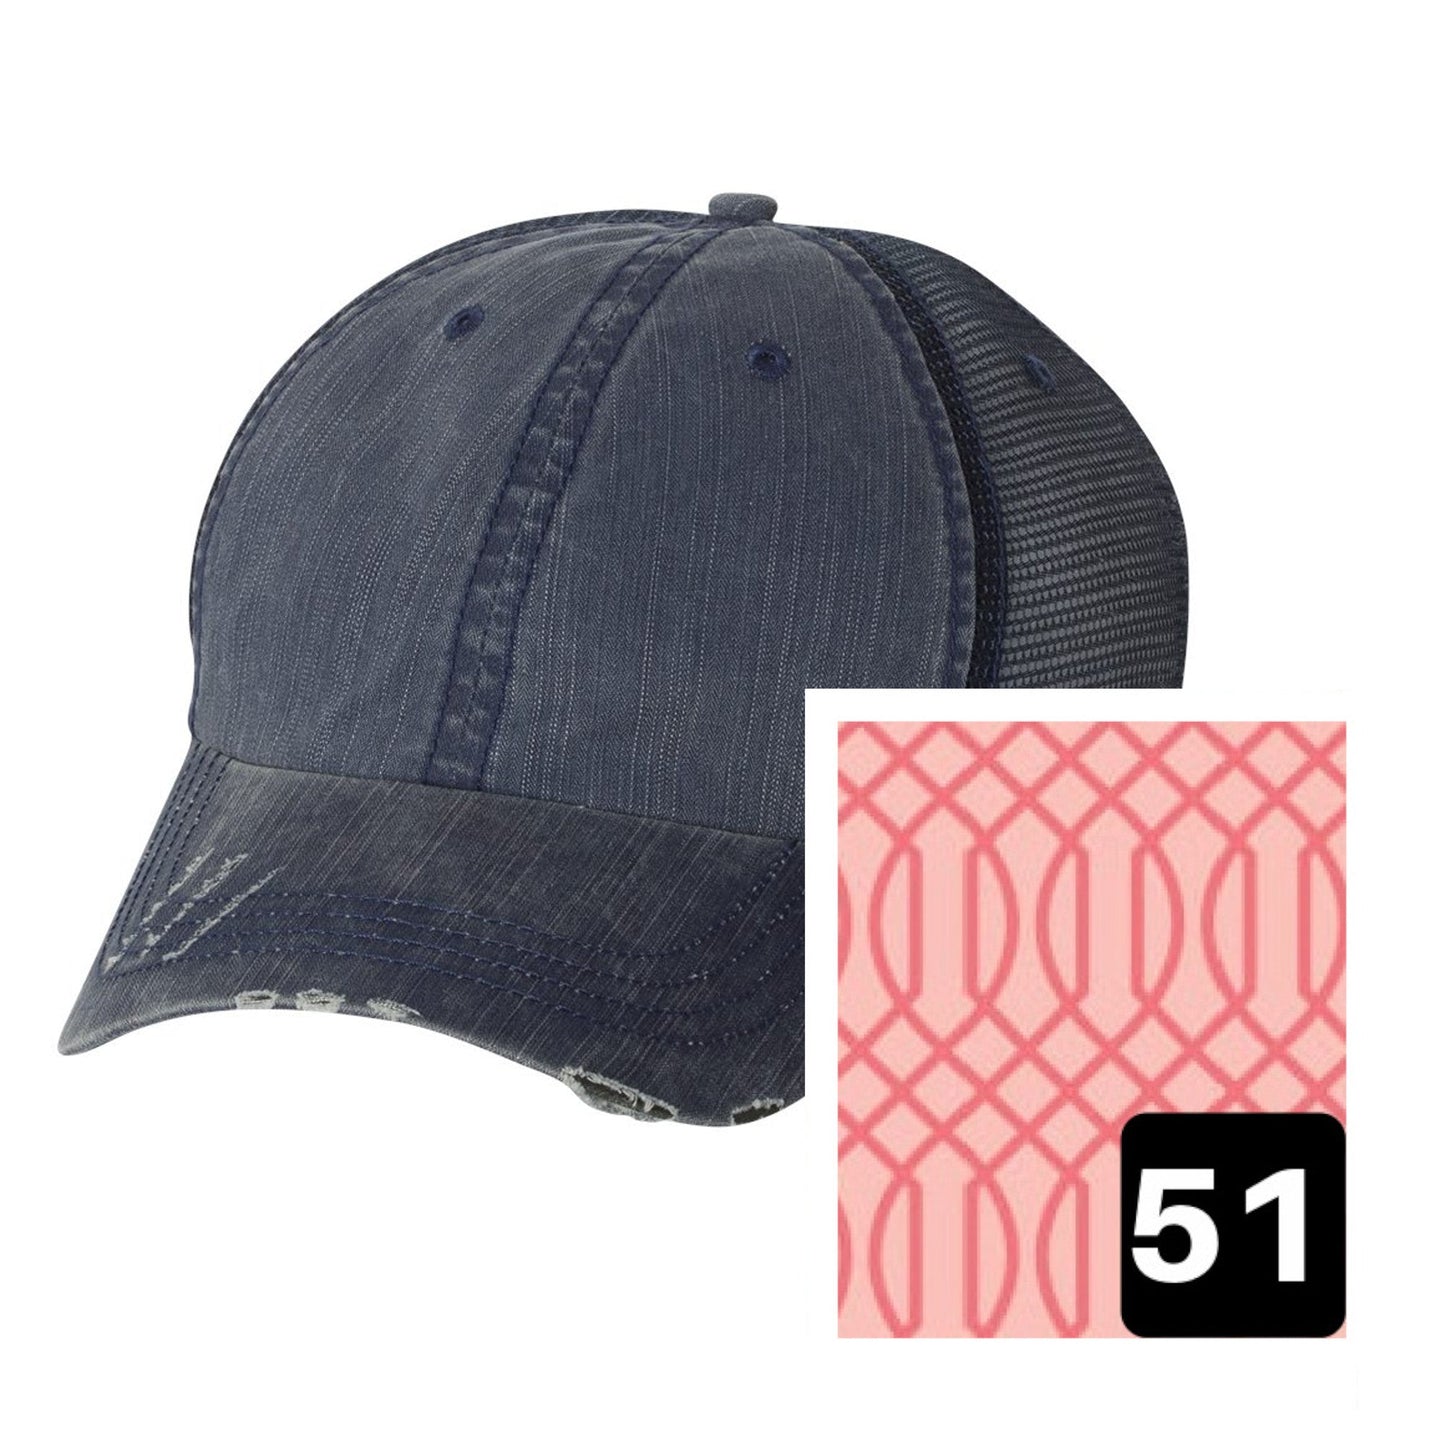 Alaska Hat | Navy Distressed Trucker Cap | Many Fabric Choices